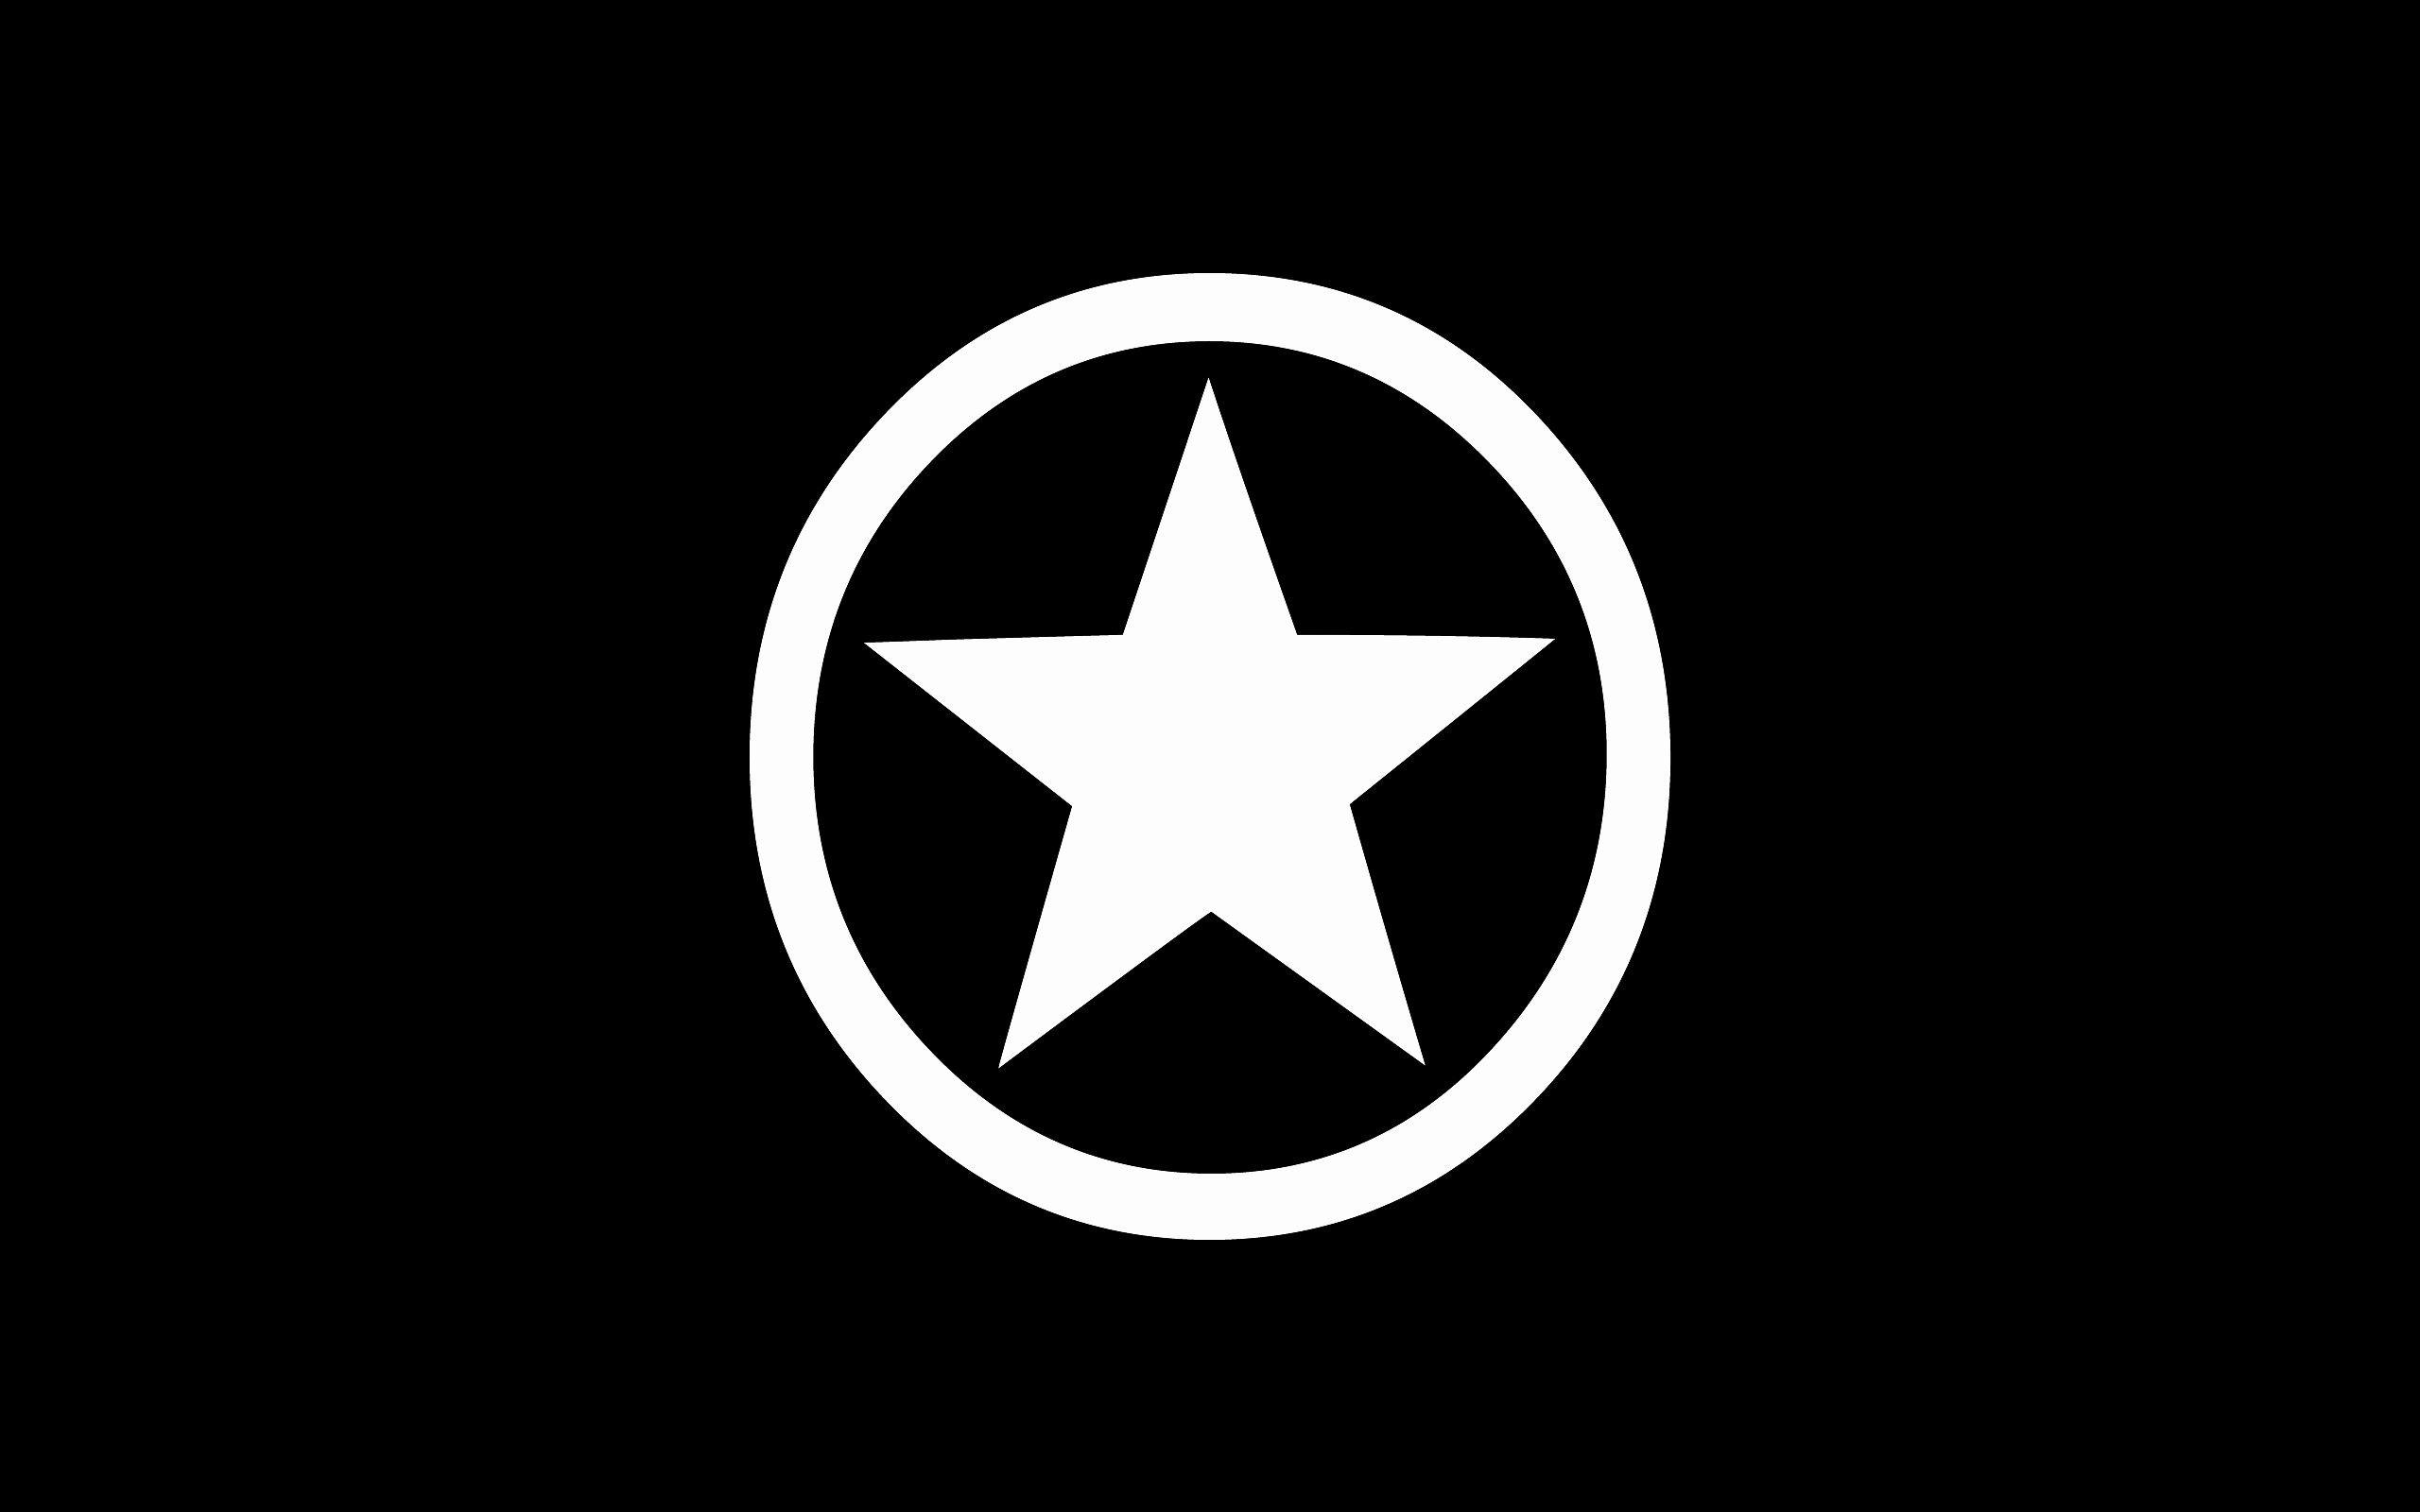 Dark Wallpaper HD New All Star Converse White Logo On Black